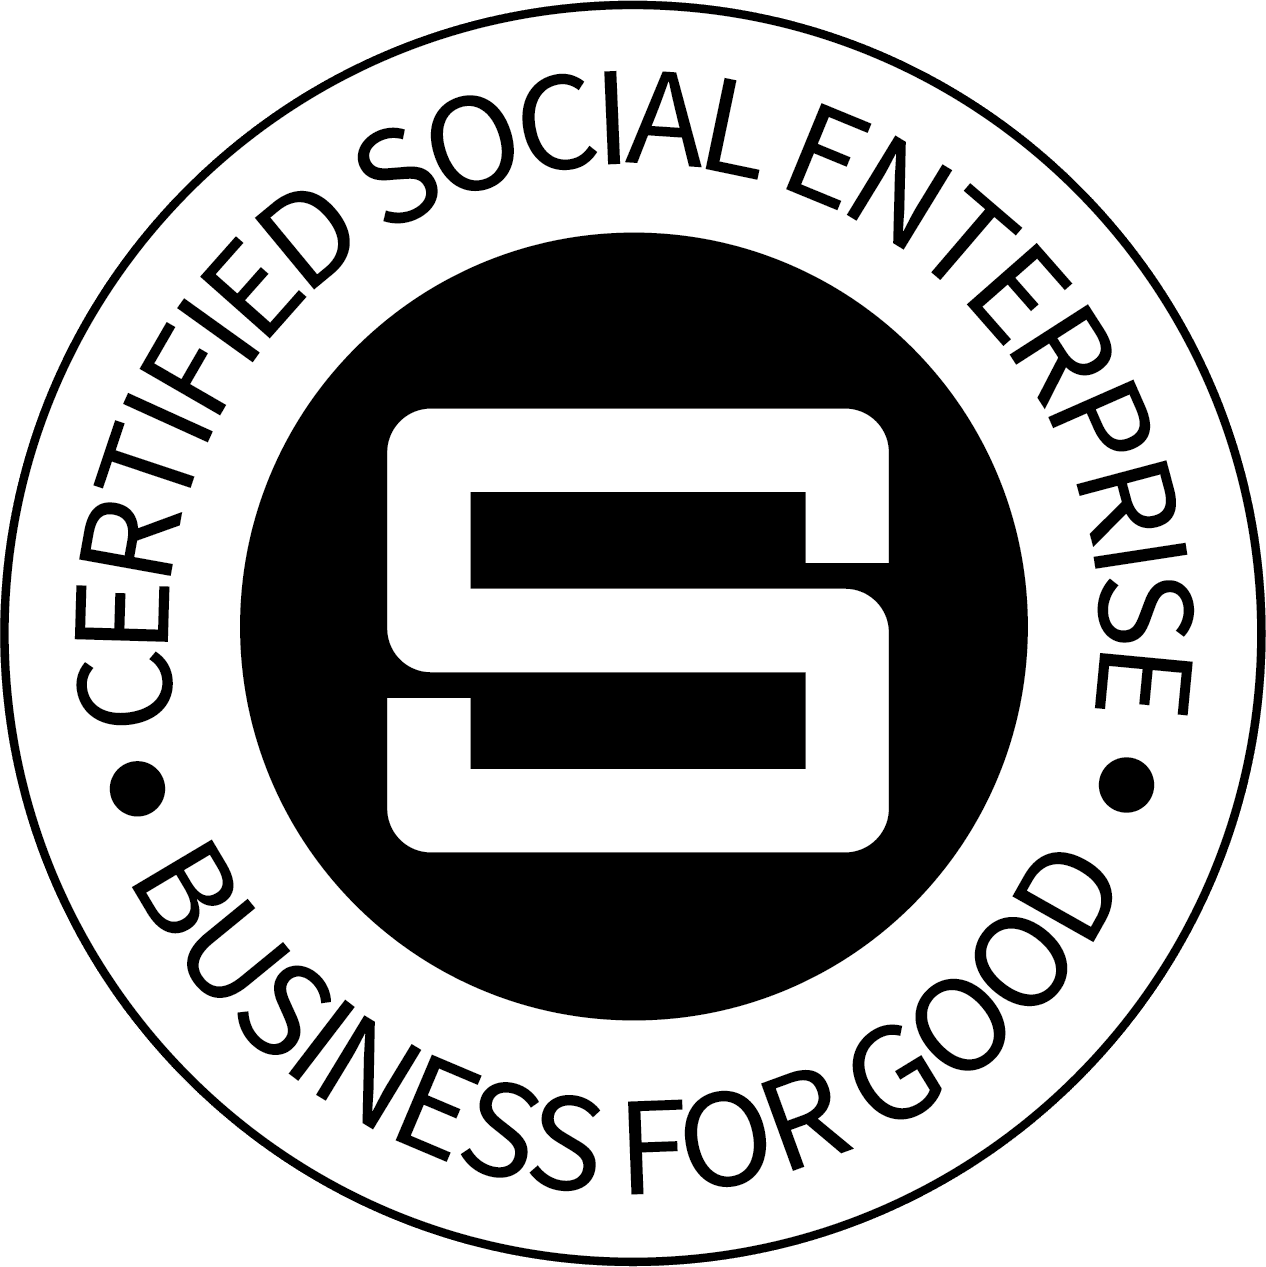 Certified Social Enterprise - Business for Good